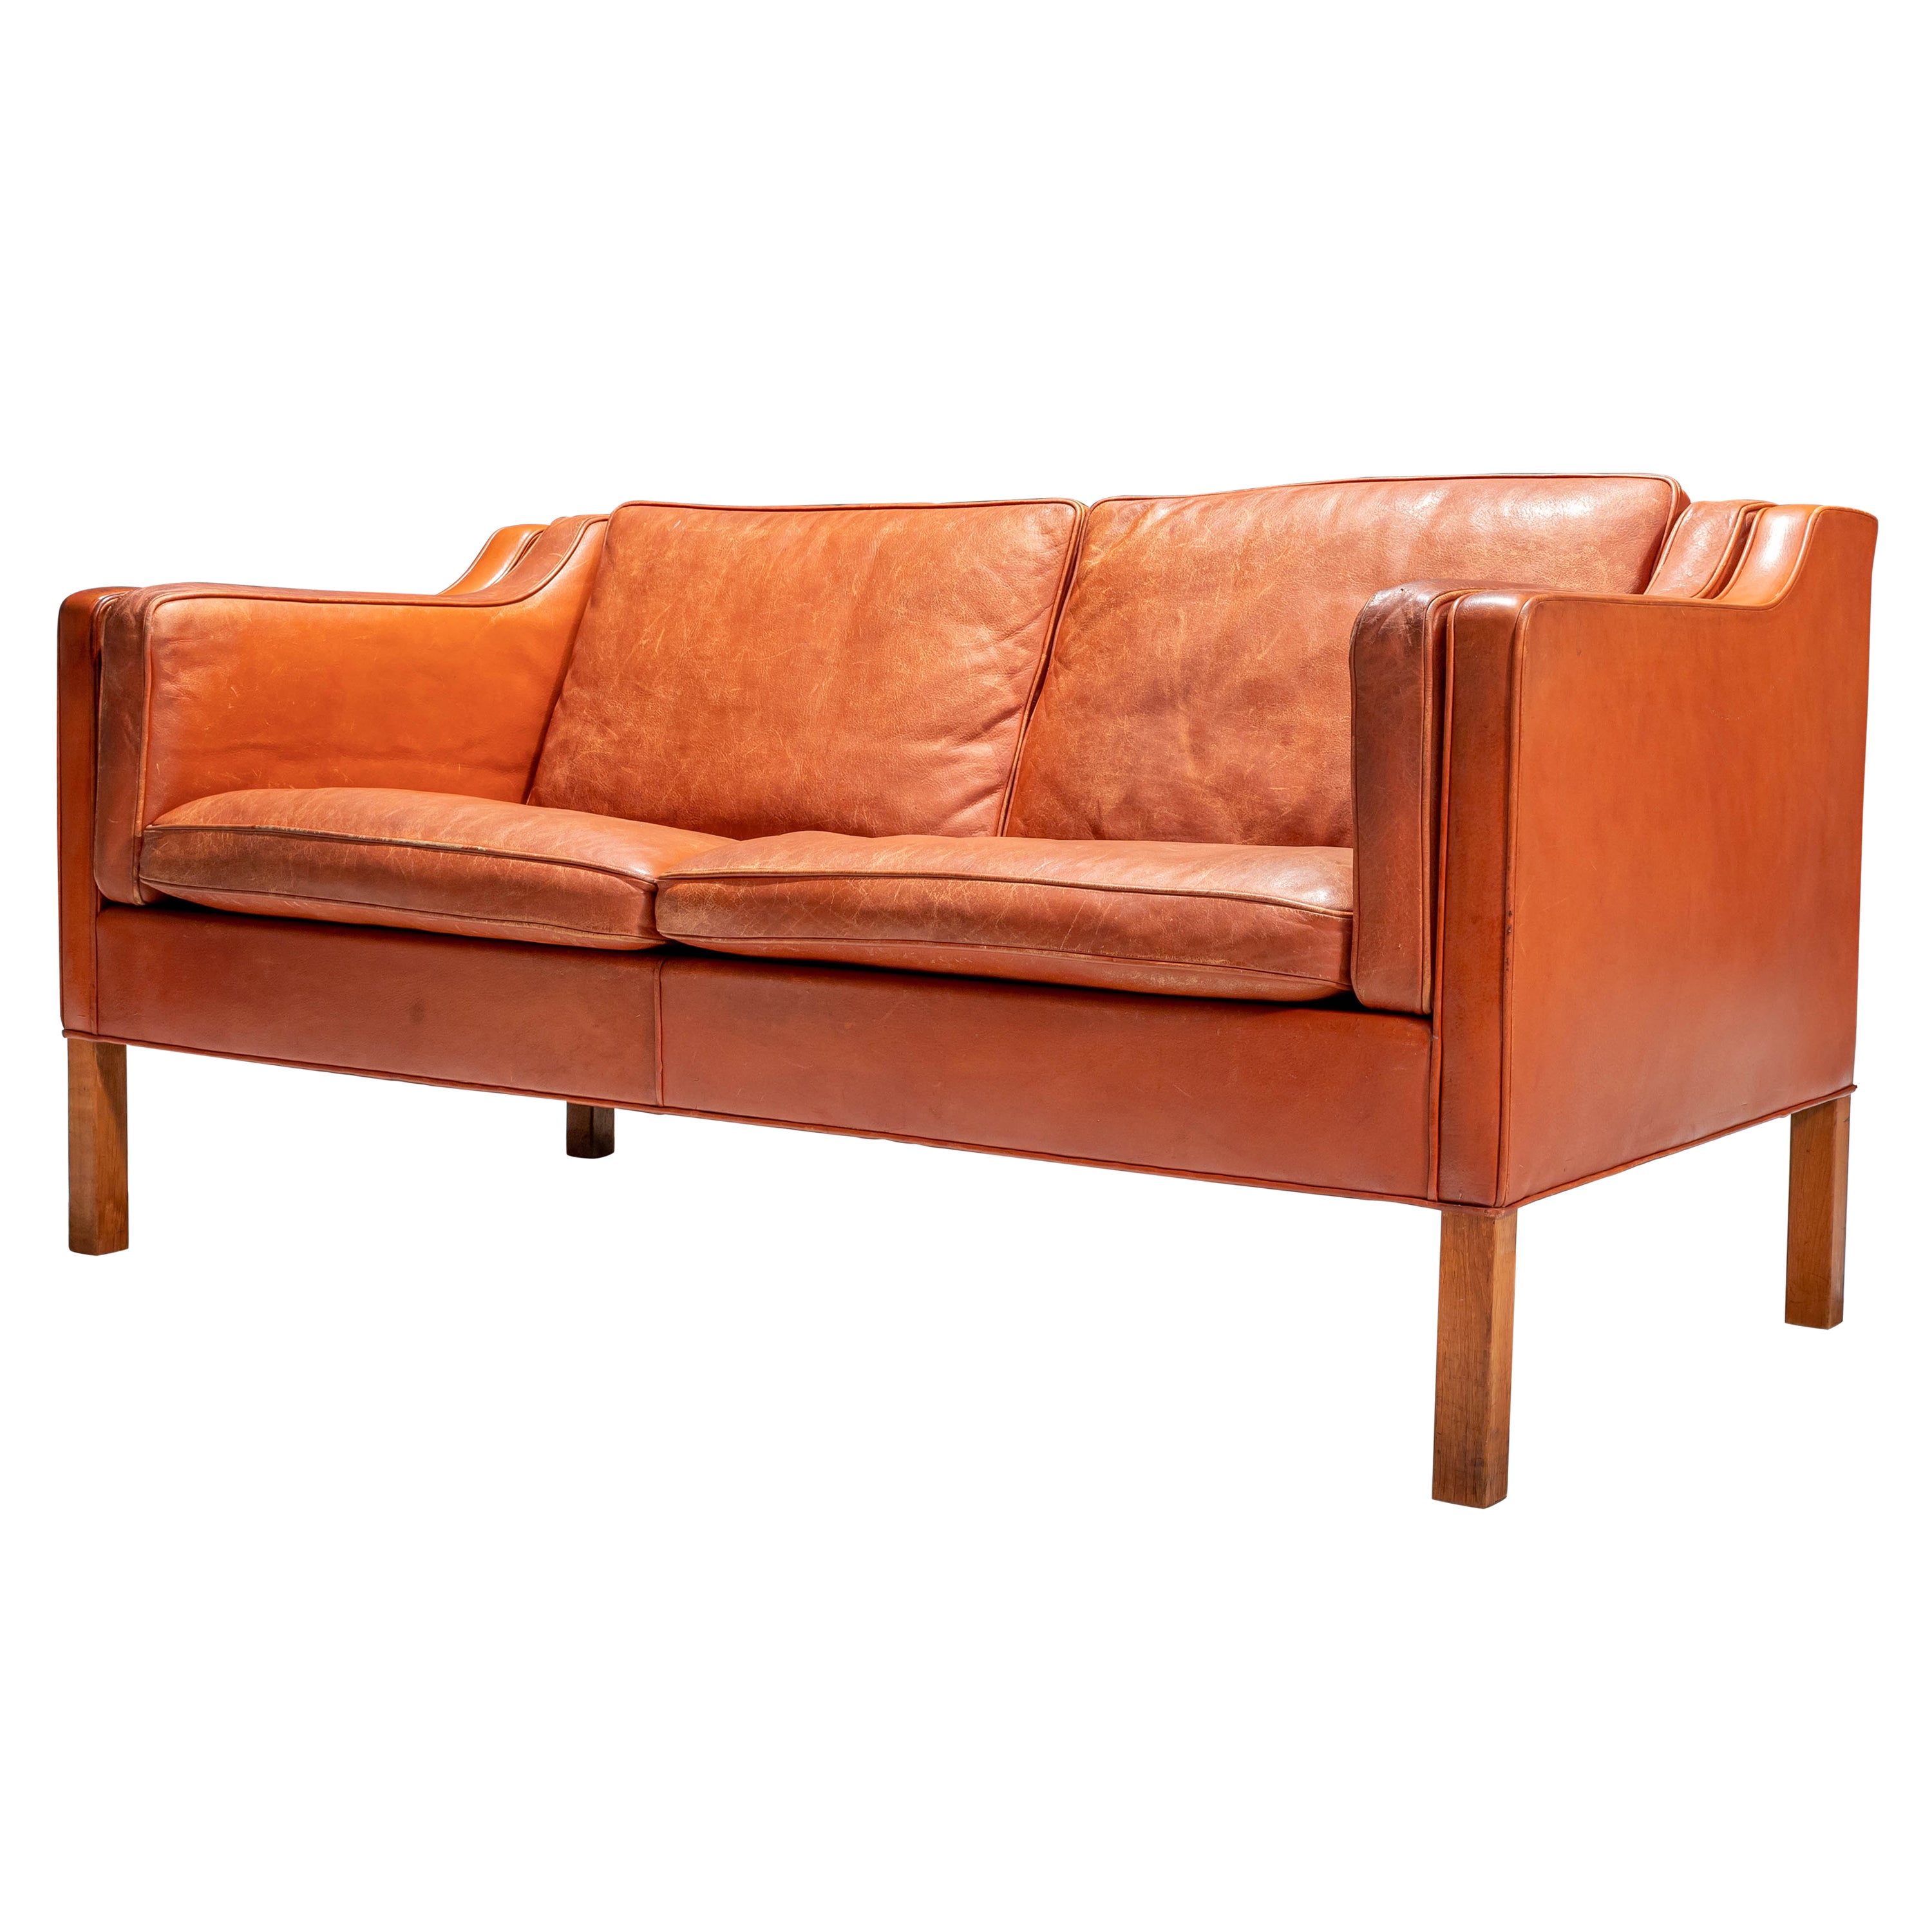 Børge Mogensen Sofa 2212 in Brick-Coloured Brown Leather and Oak, Denmark 1960's